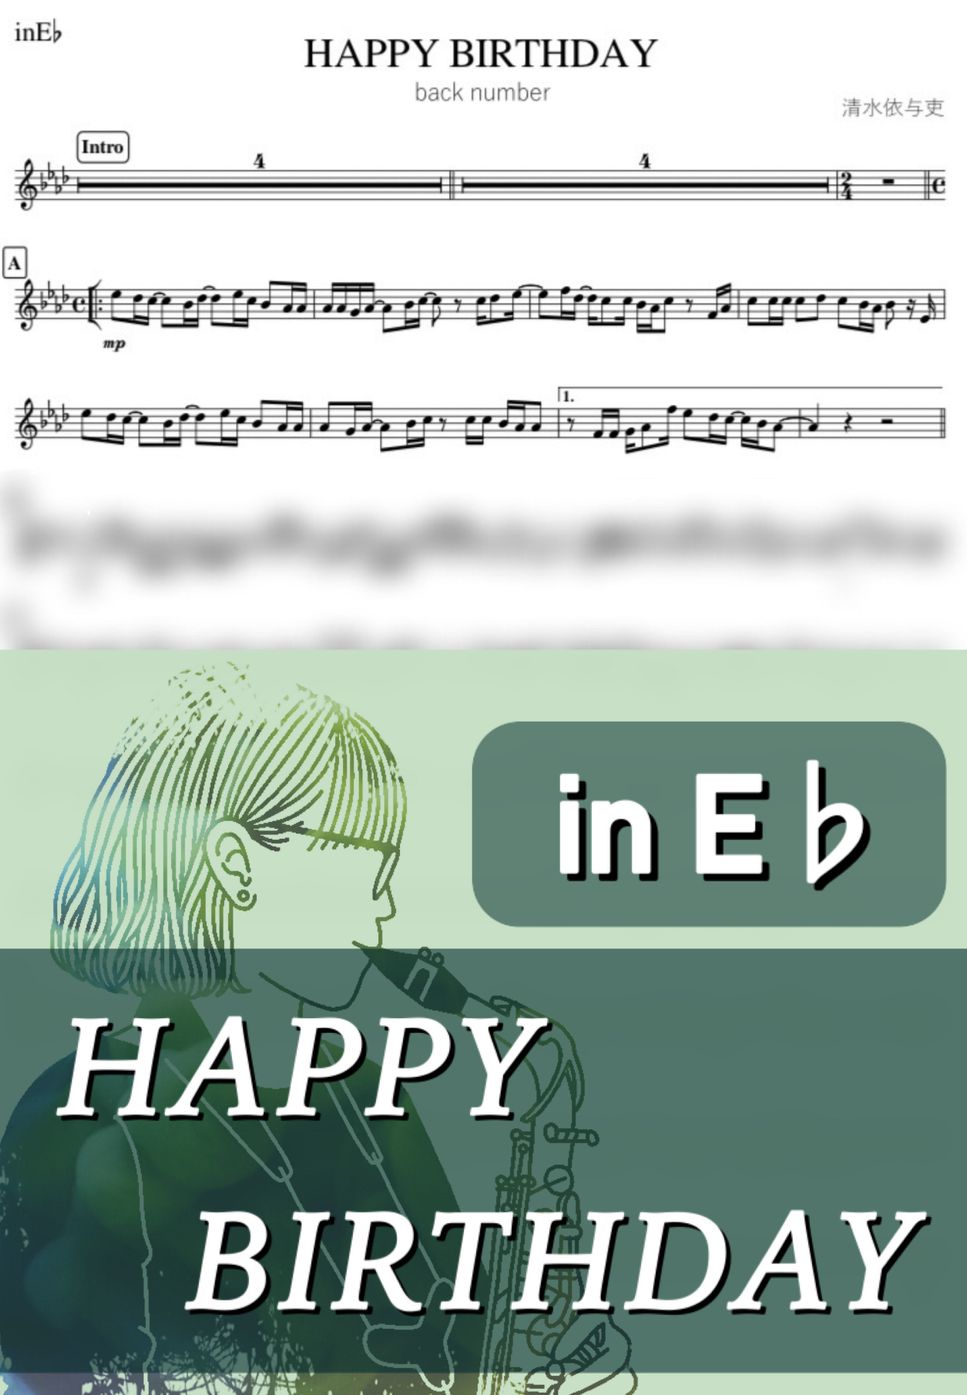 back number - HAPPY BIRTHDAY (E♭) by kanamusic